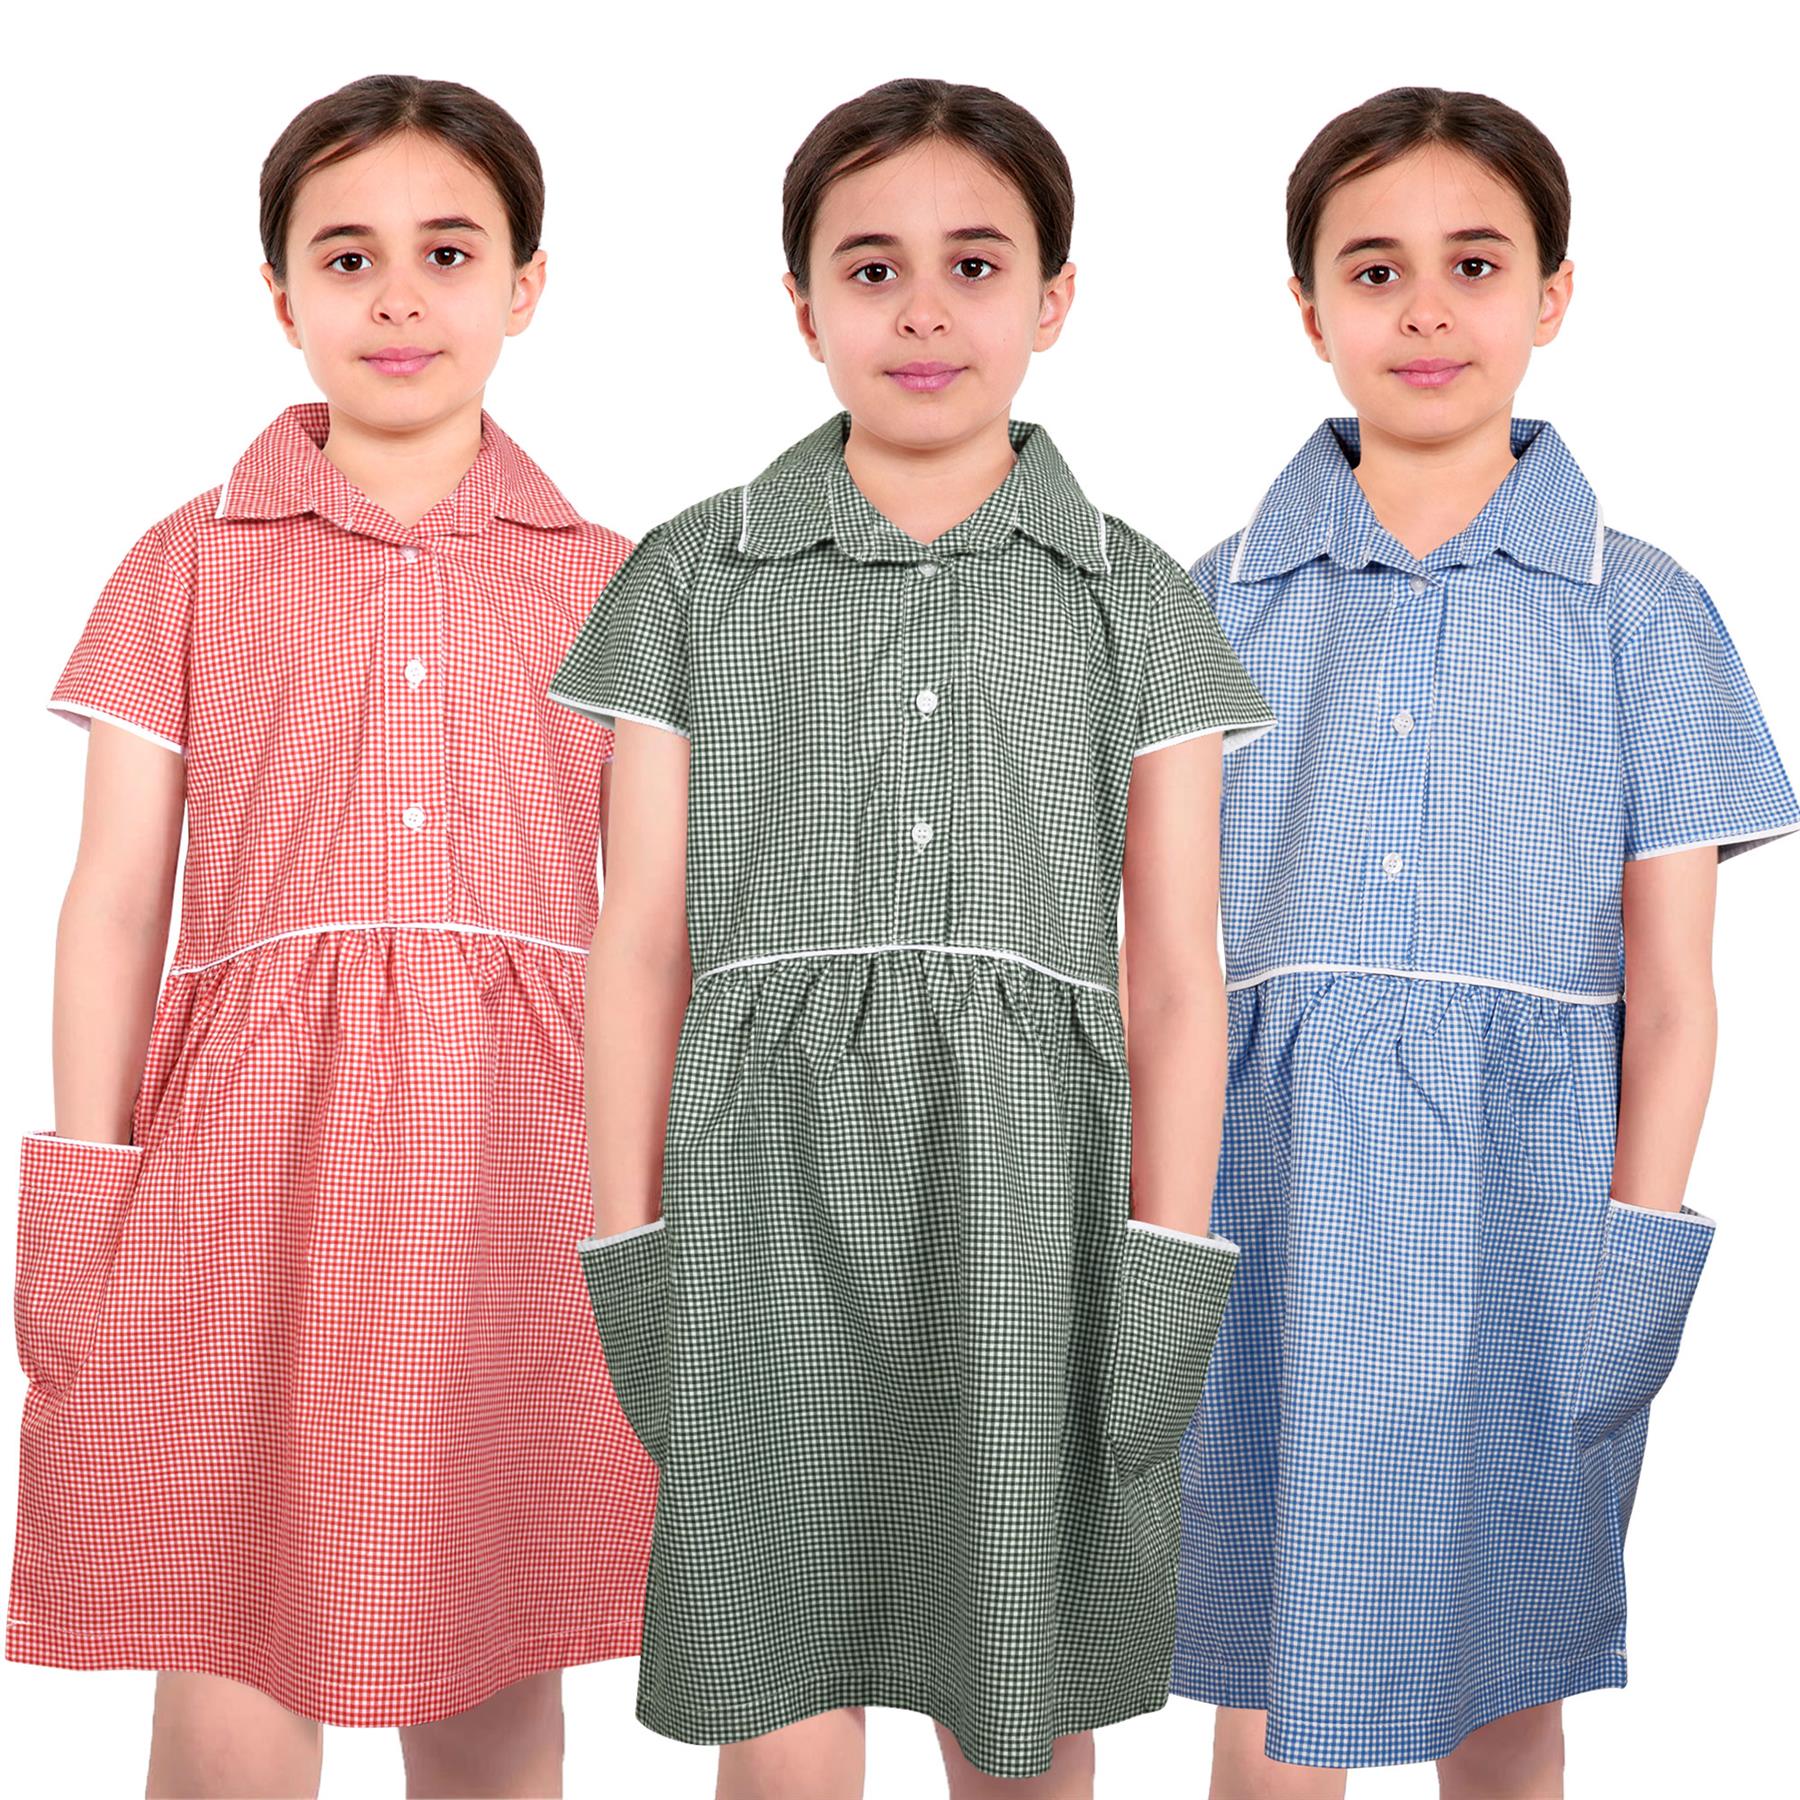 Kids Girls Pack Of 2 Uniform School Dress Gingham Dress With Matching Scrunchies